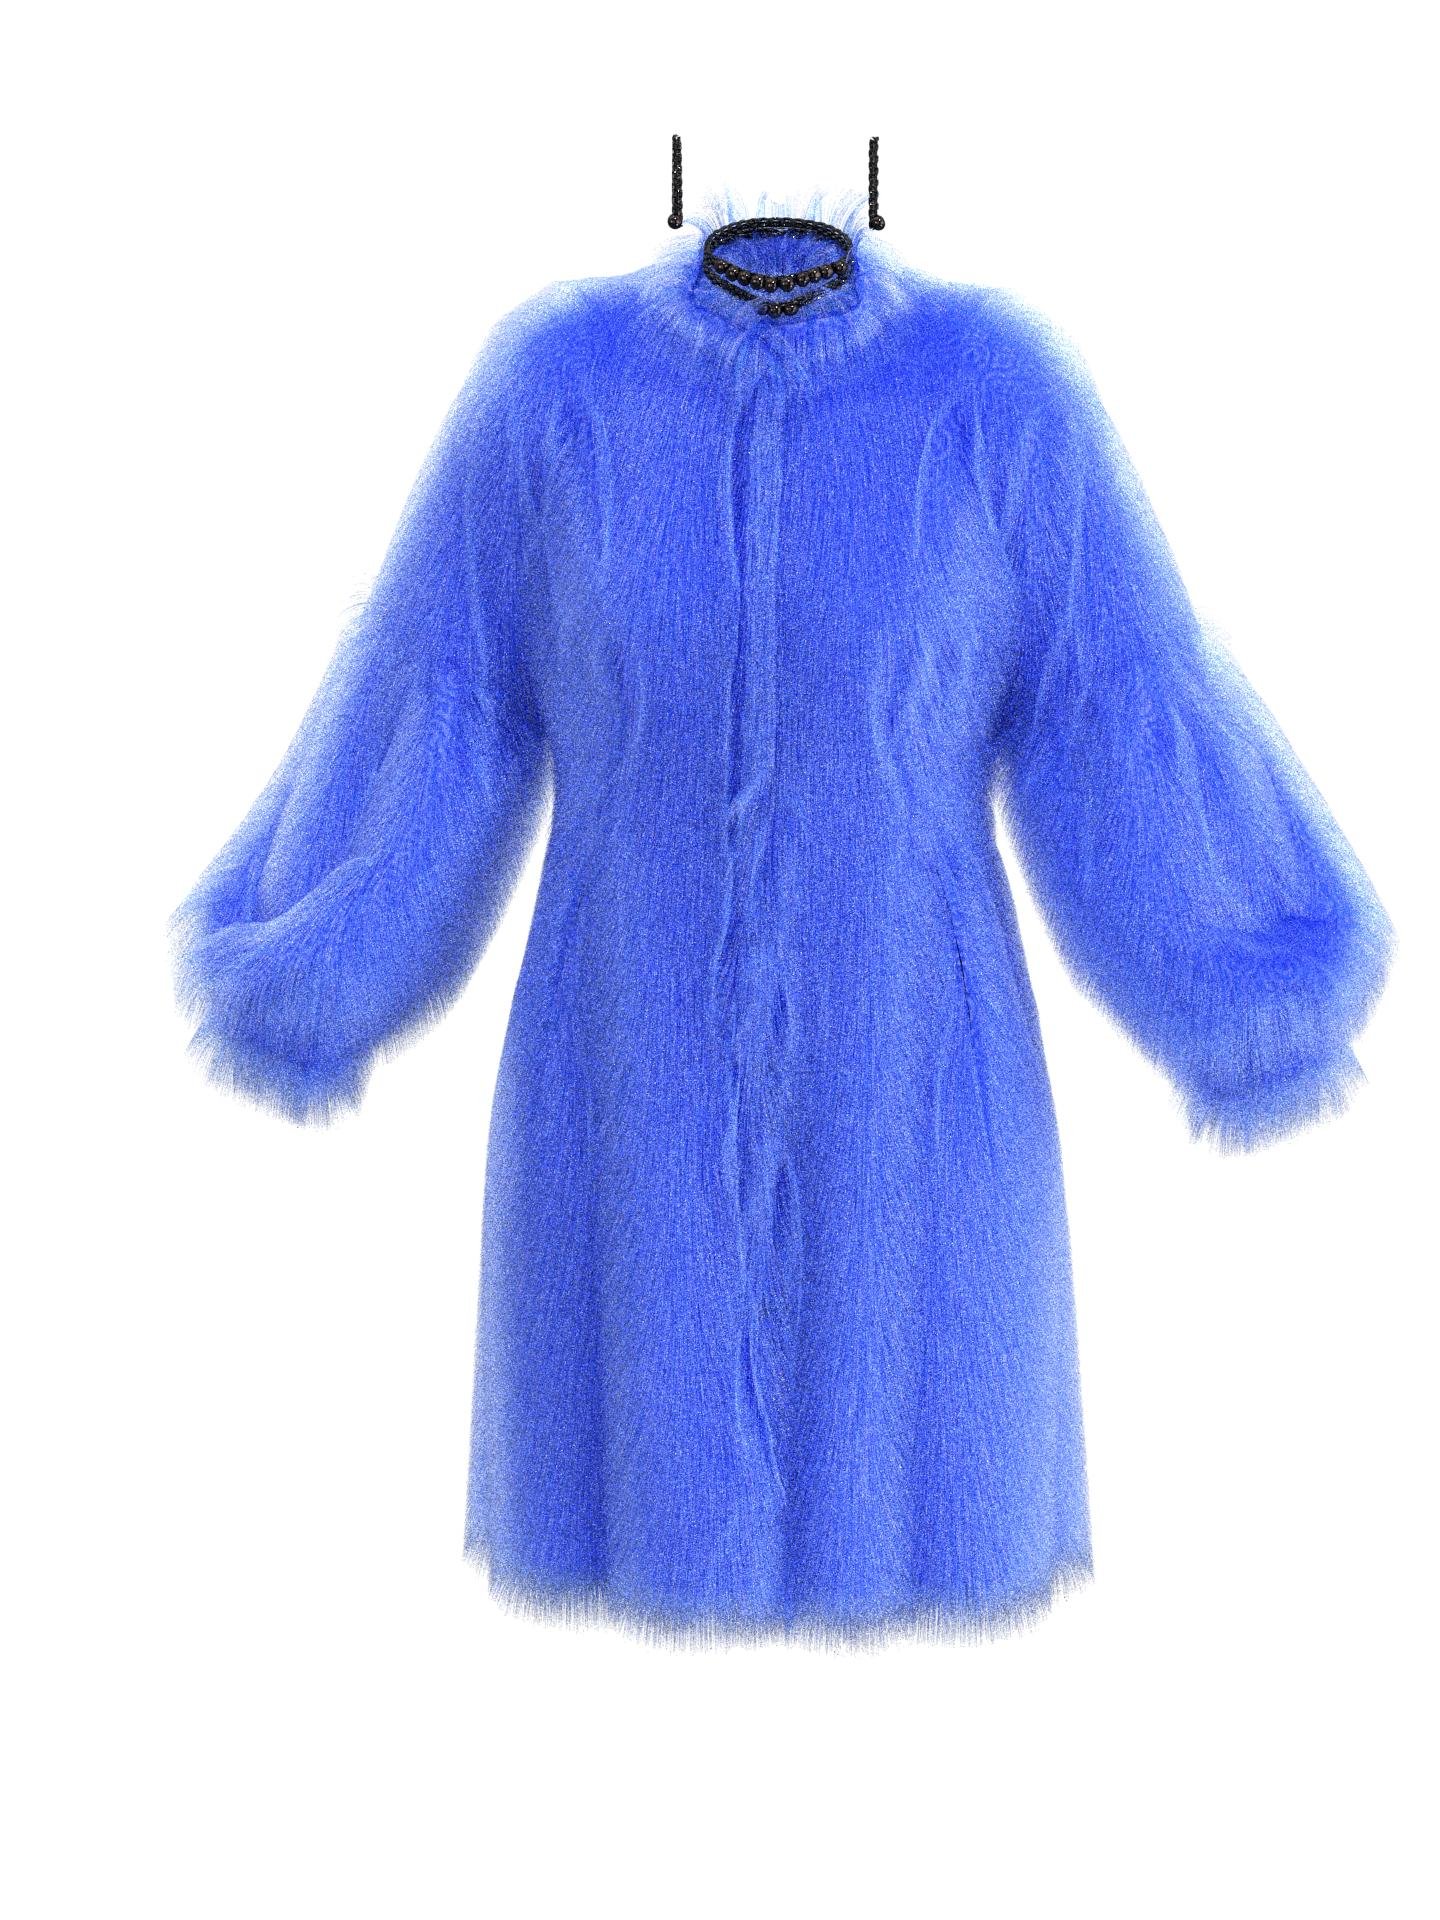 Fur Coat Blue Dream (FCBD) by BY_SOFICOR